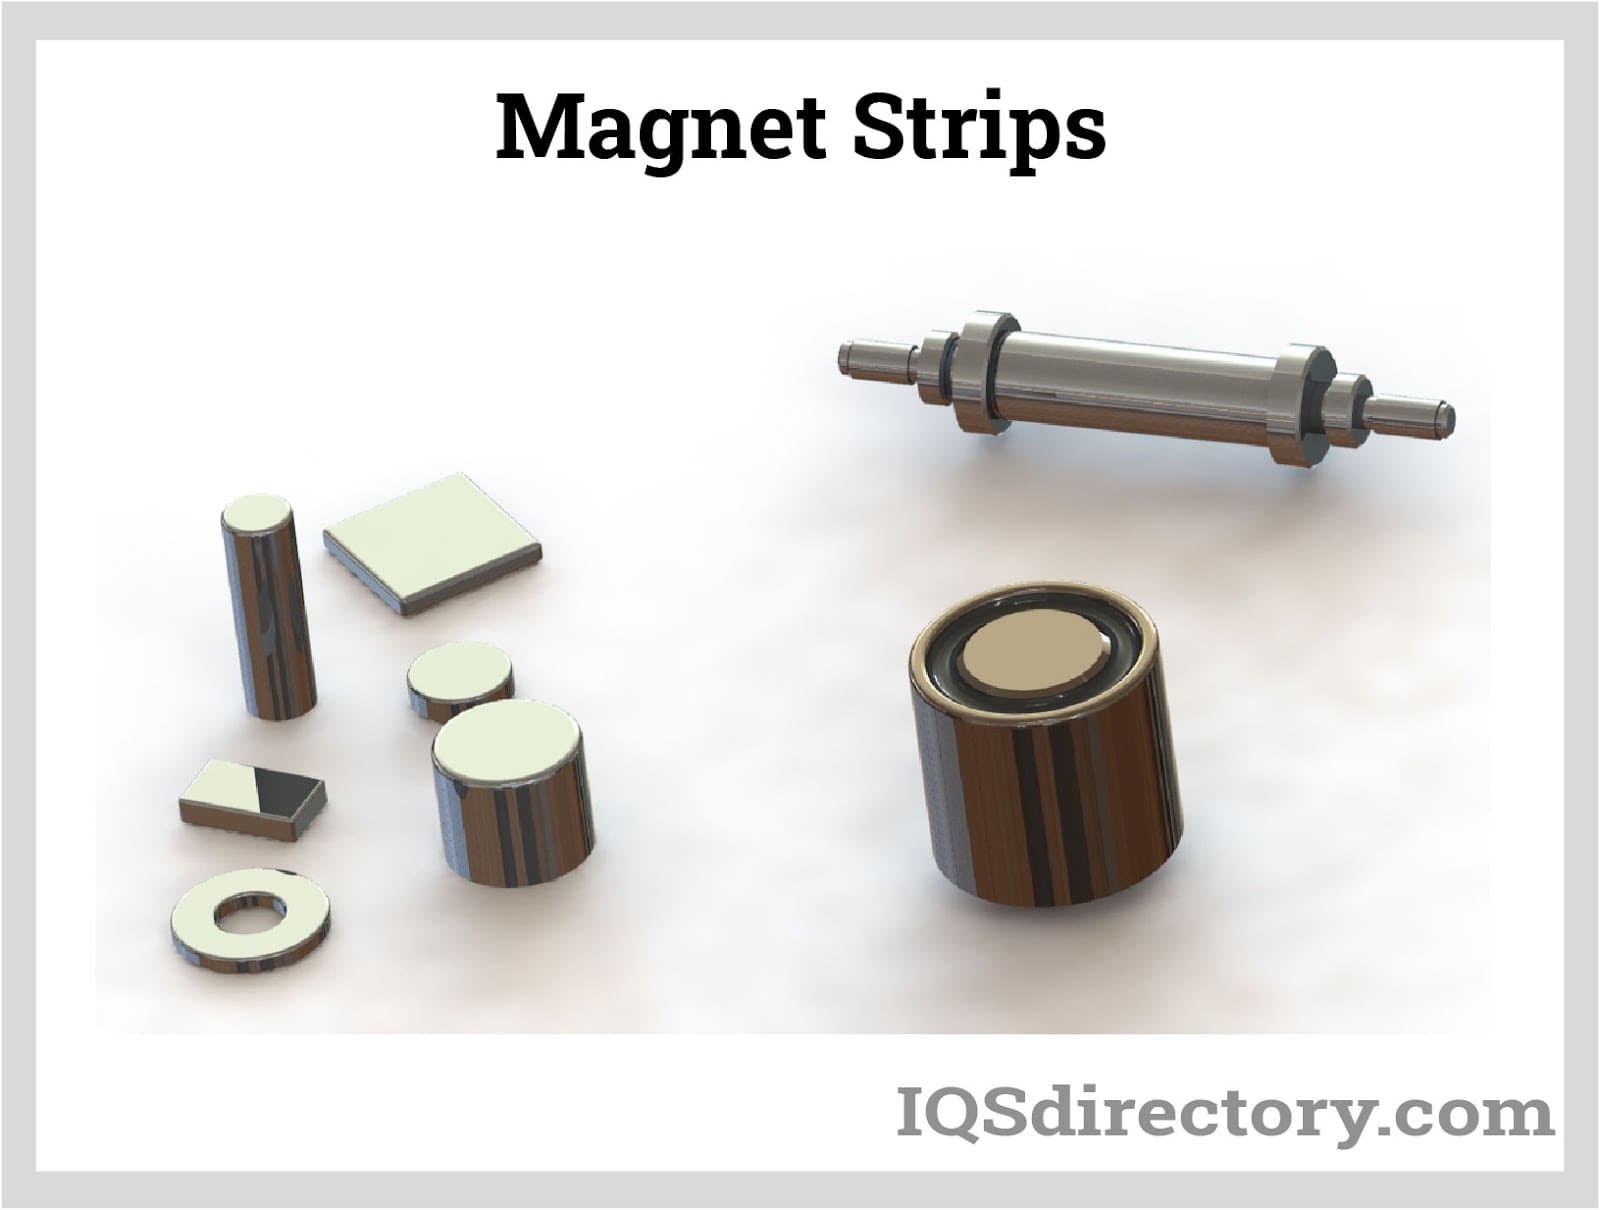 Magnet Strips